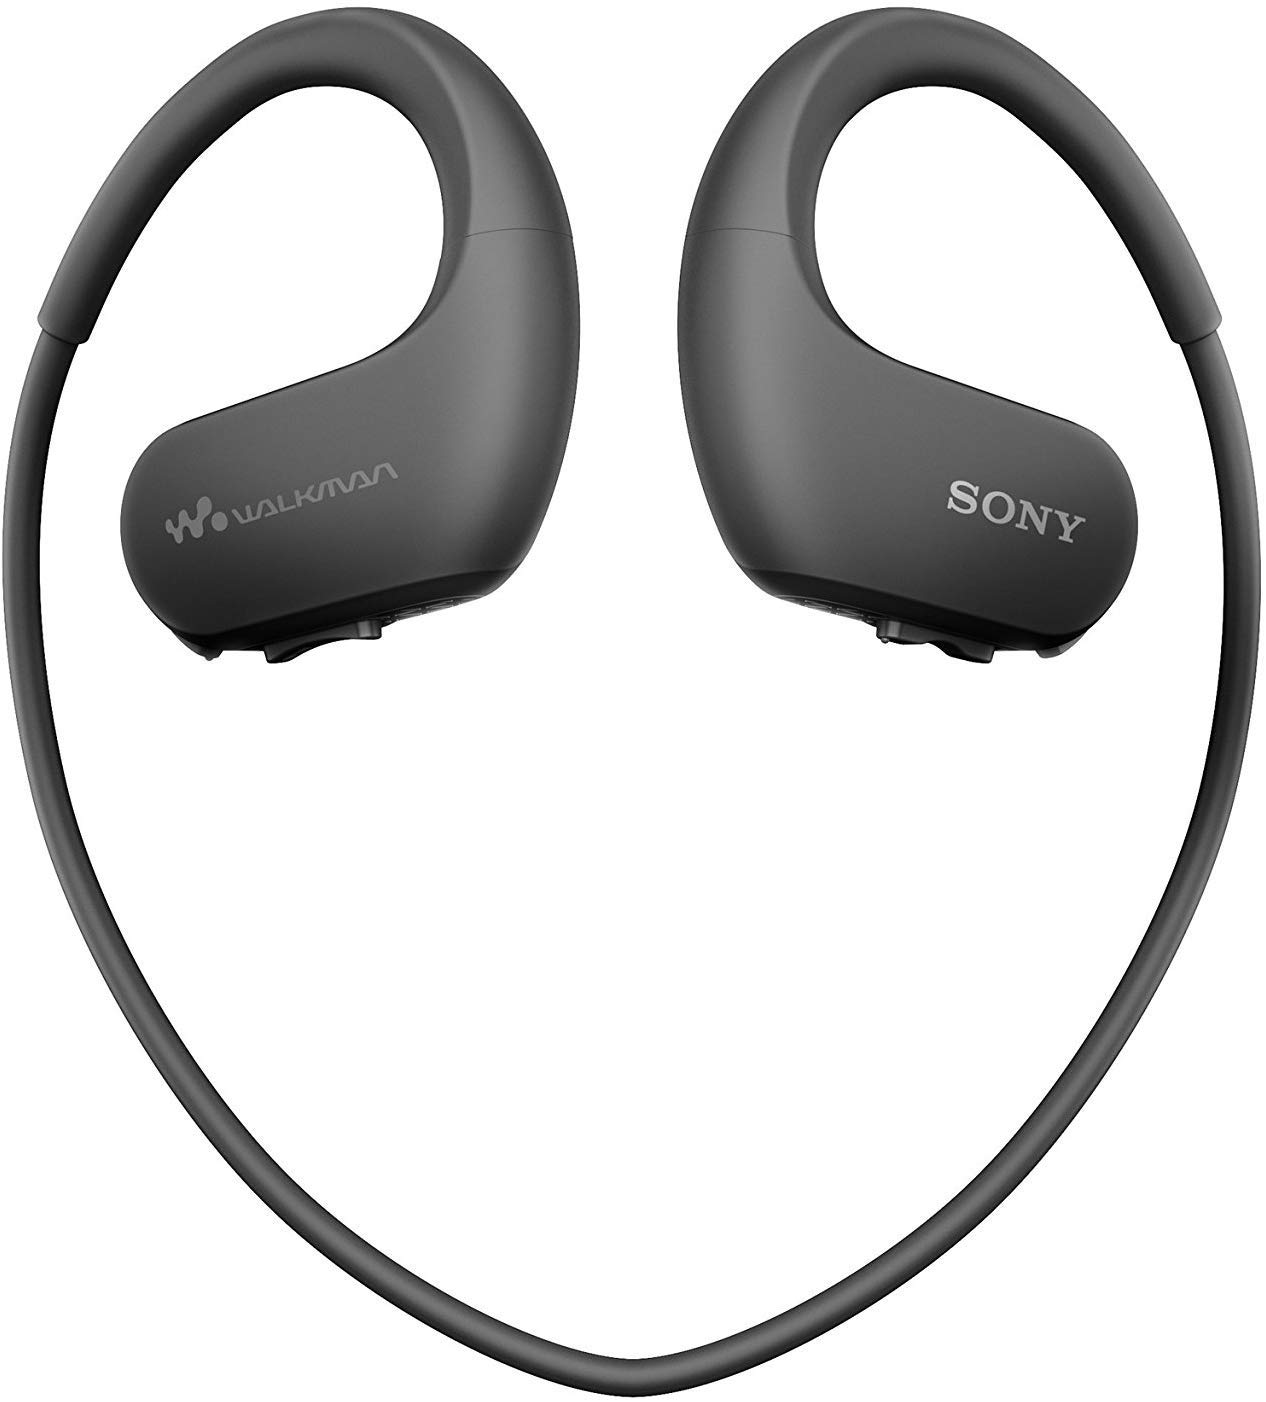 Sony سماعة رأس ووكمان 4 جيجا مدمجة NW-WS413 (أسود)